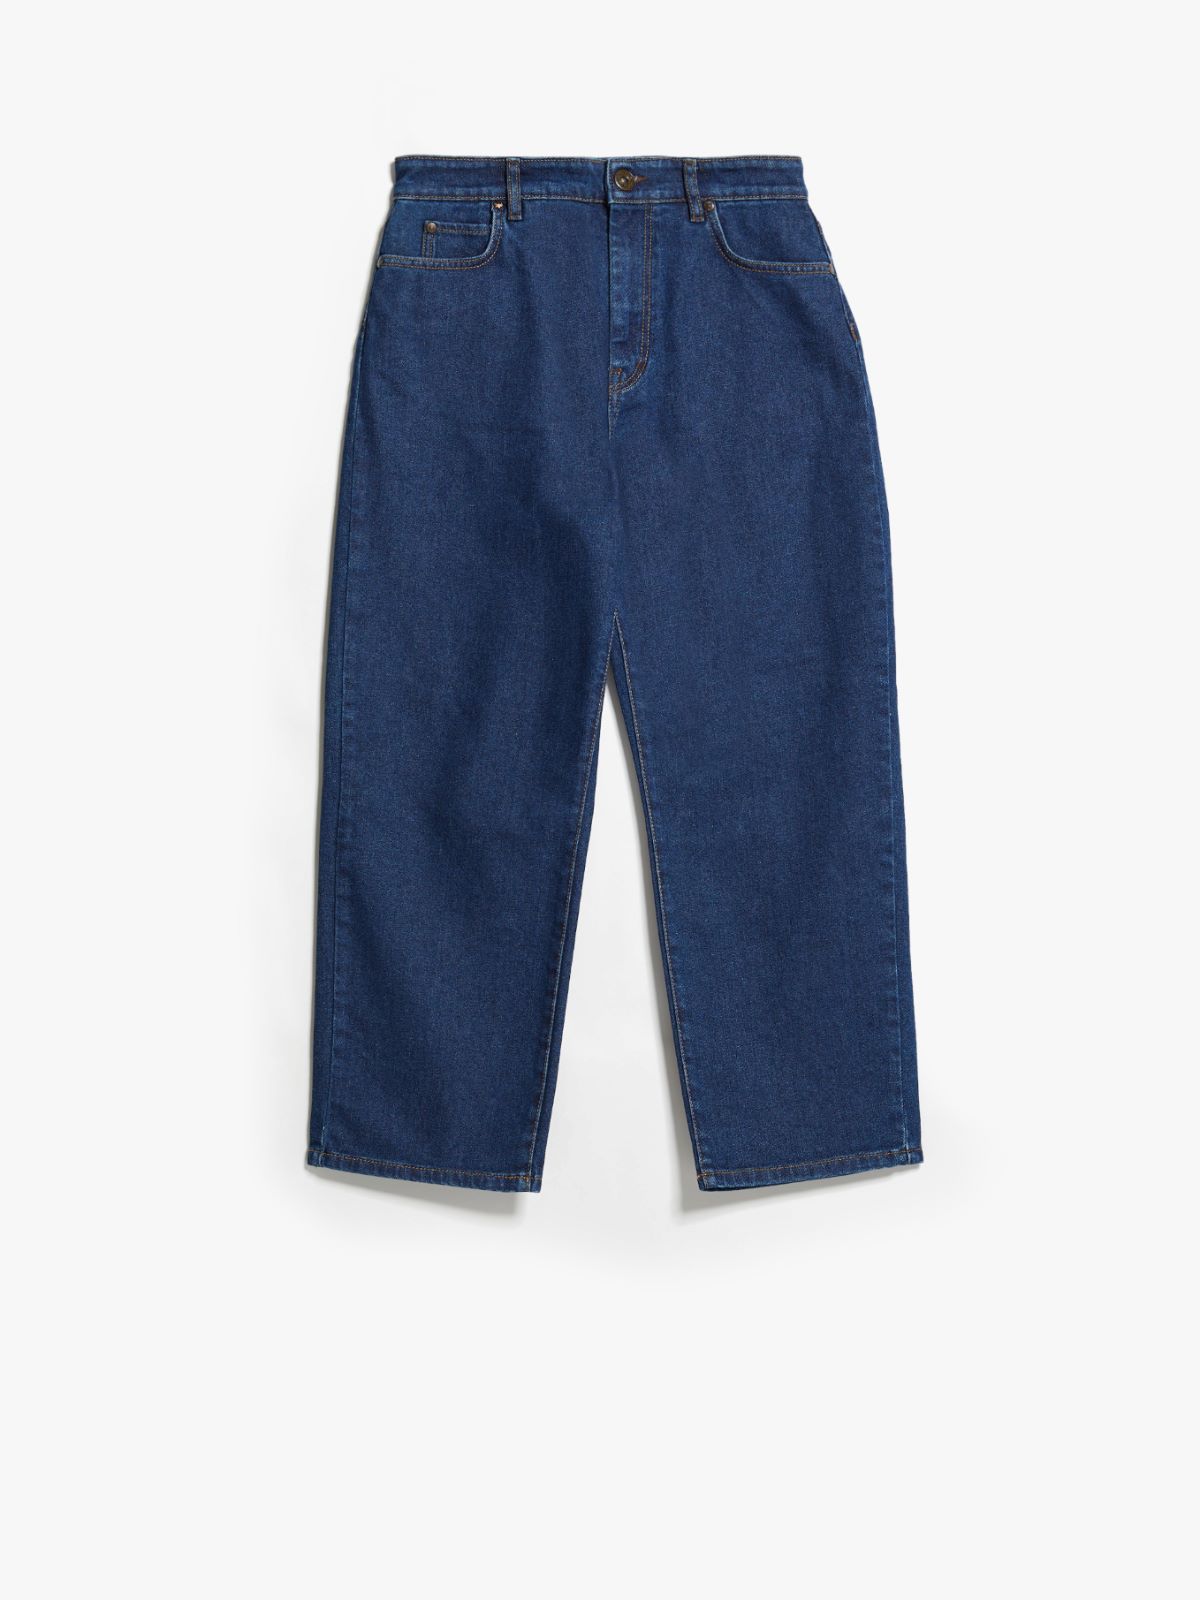 Five-pocket denim jeans - NAVY - Weekend Max Mara - 5